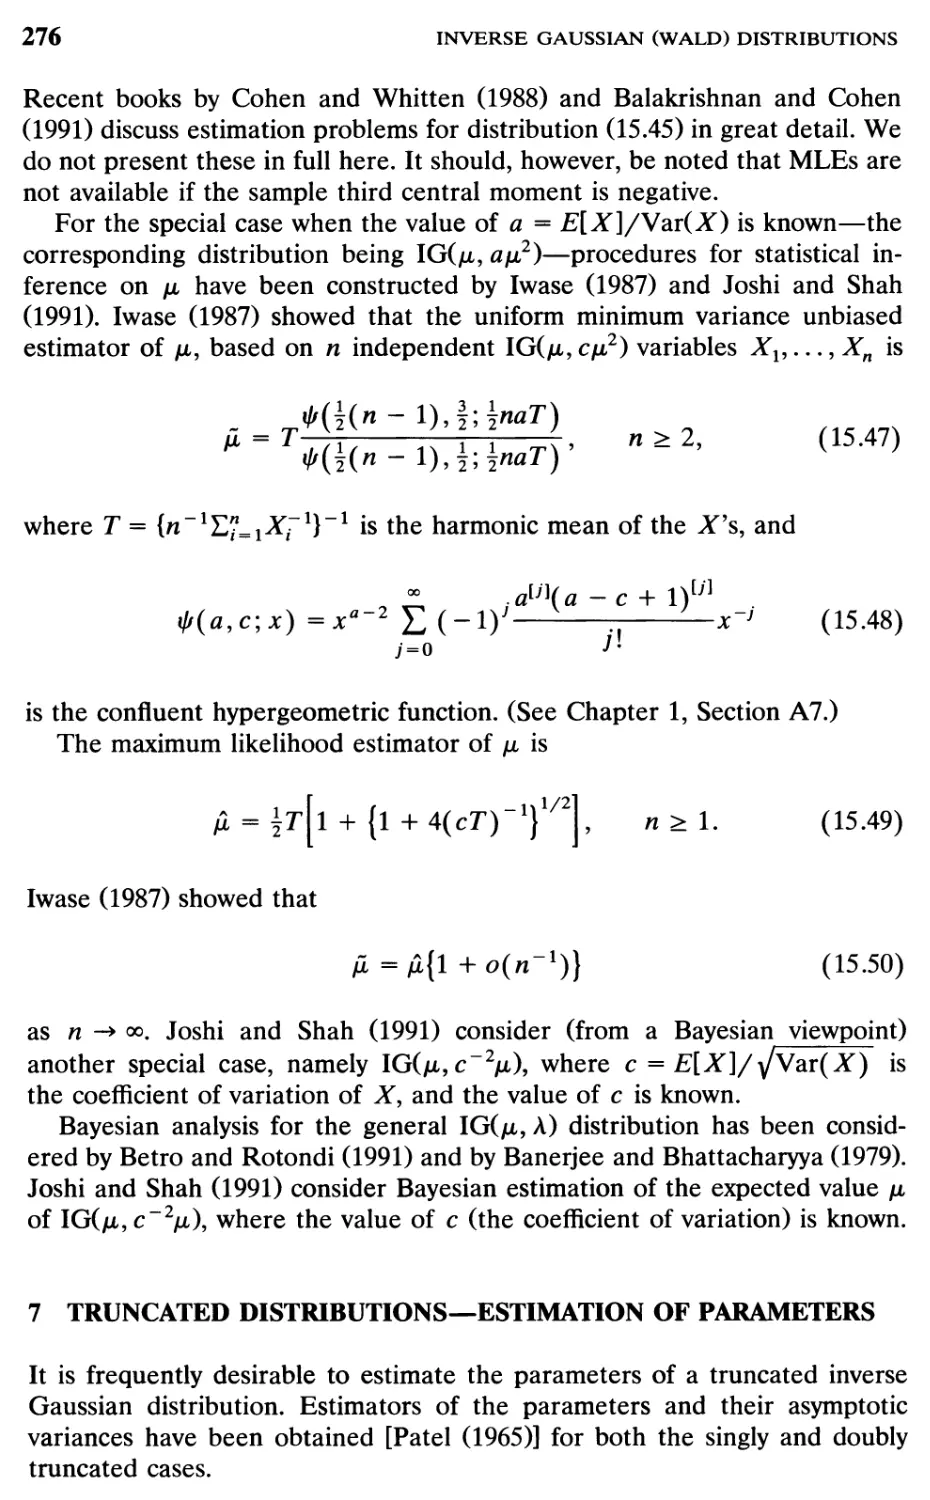 7 Truncated Distributions—Estimation of Parameters, 276